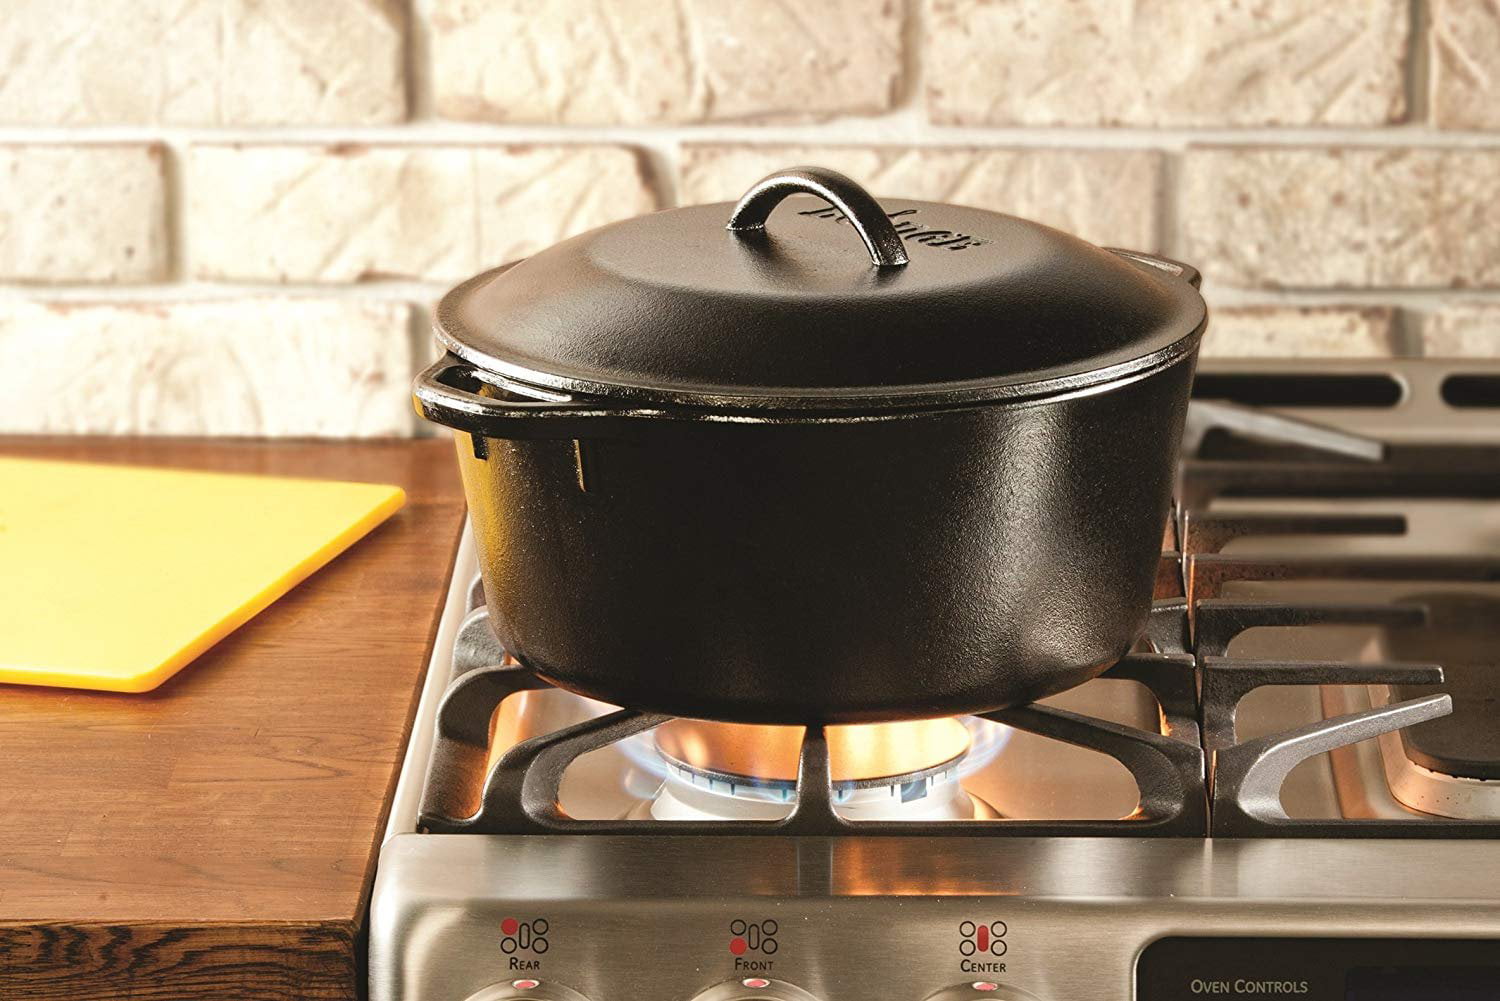 Lodge 5 Qt. Cast Iron Dutch Oven – The Happy Cook